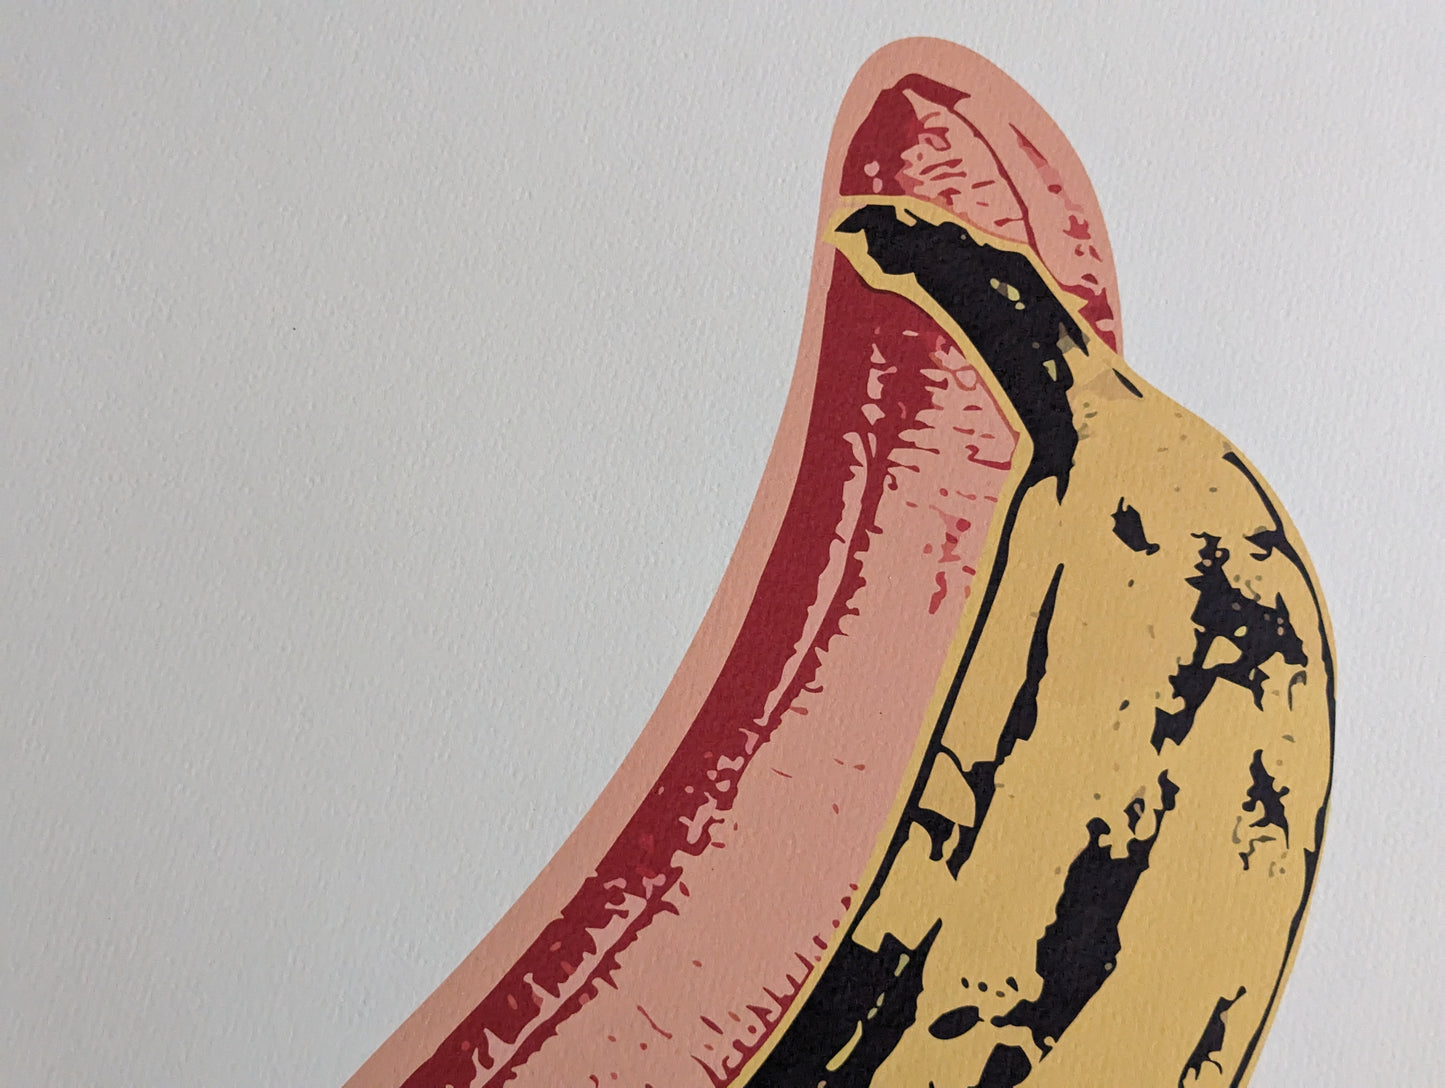 Andy Warhol - Banana (1980)